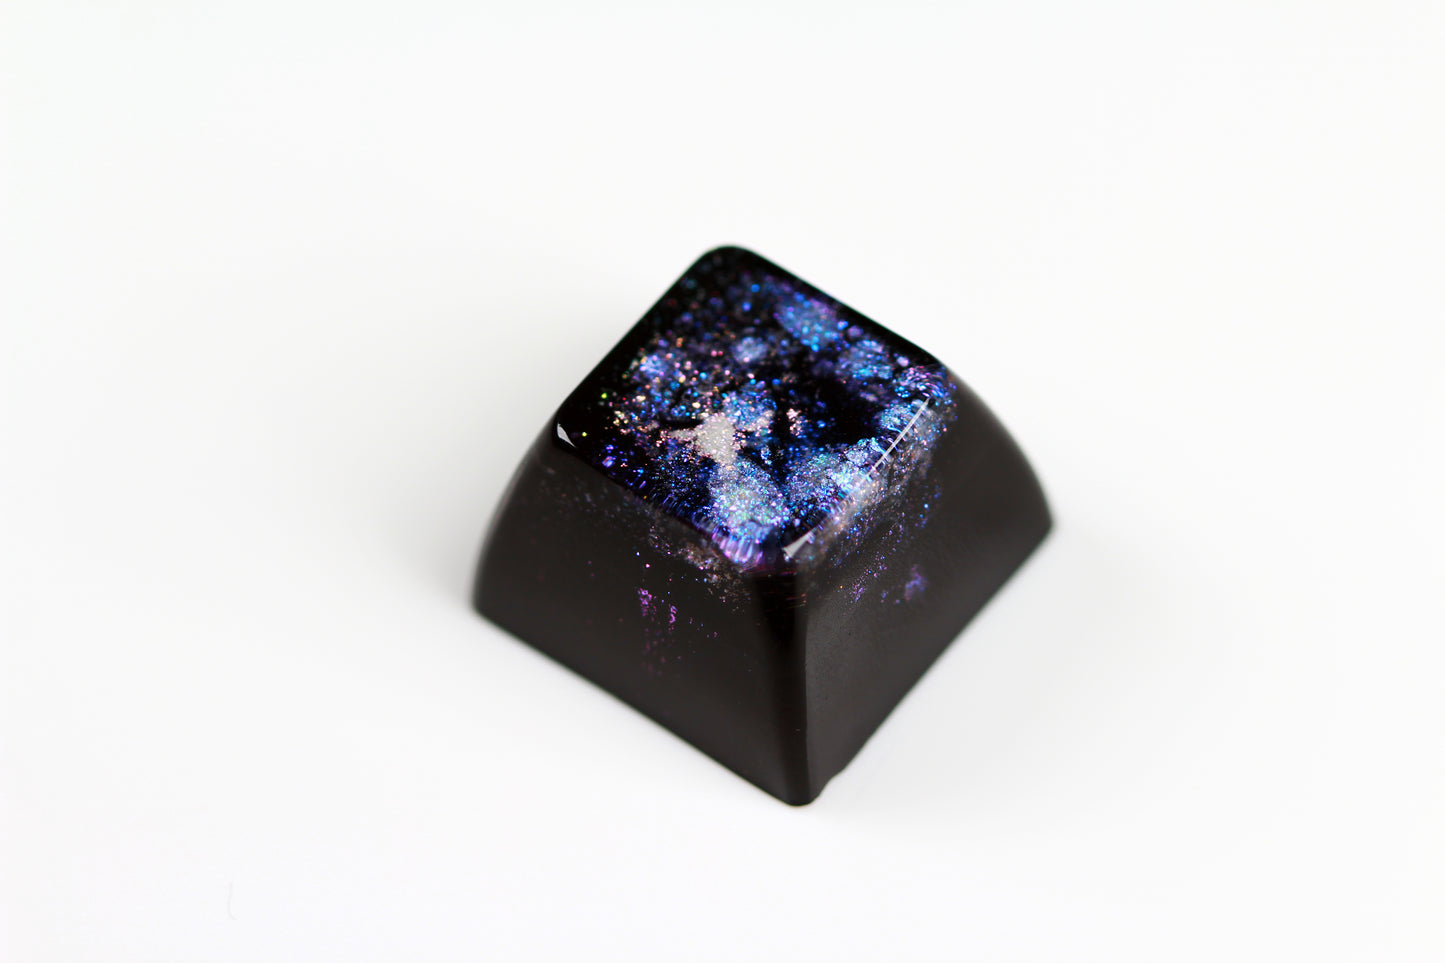 Gimpy SA Row 3 - Deep Field Opal Nebula 3 - PrimeCaps Keycap - Blank and Sculpted Artisan Keycaps for cherry MX mechanical keyboards 